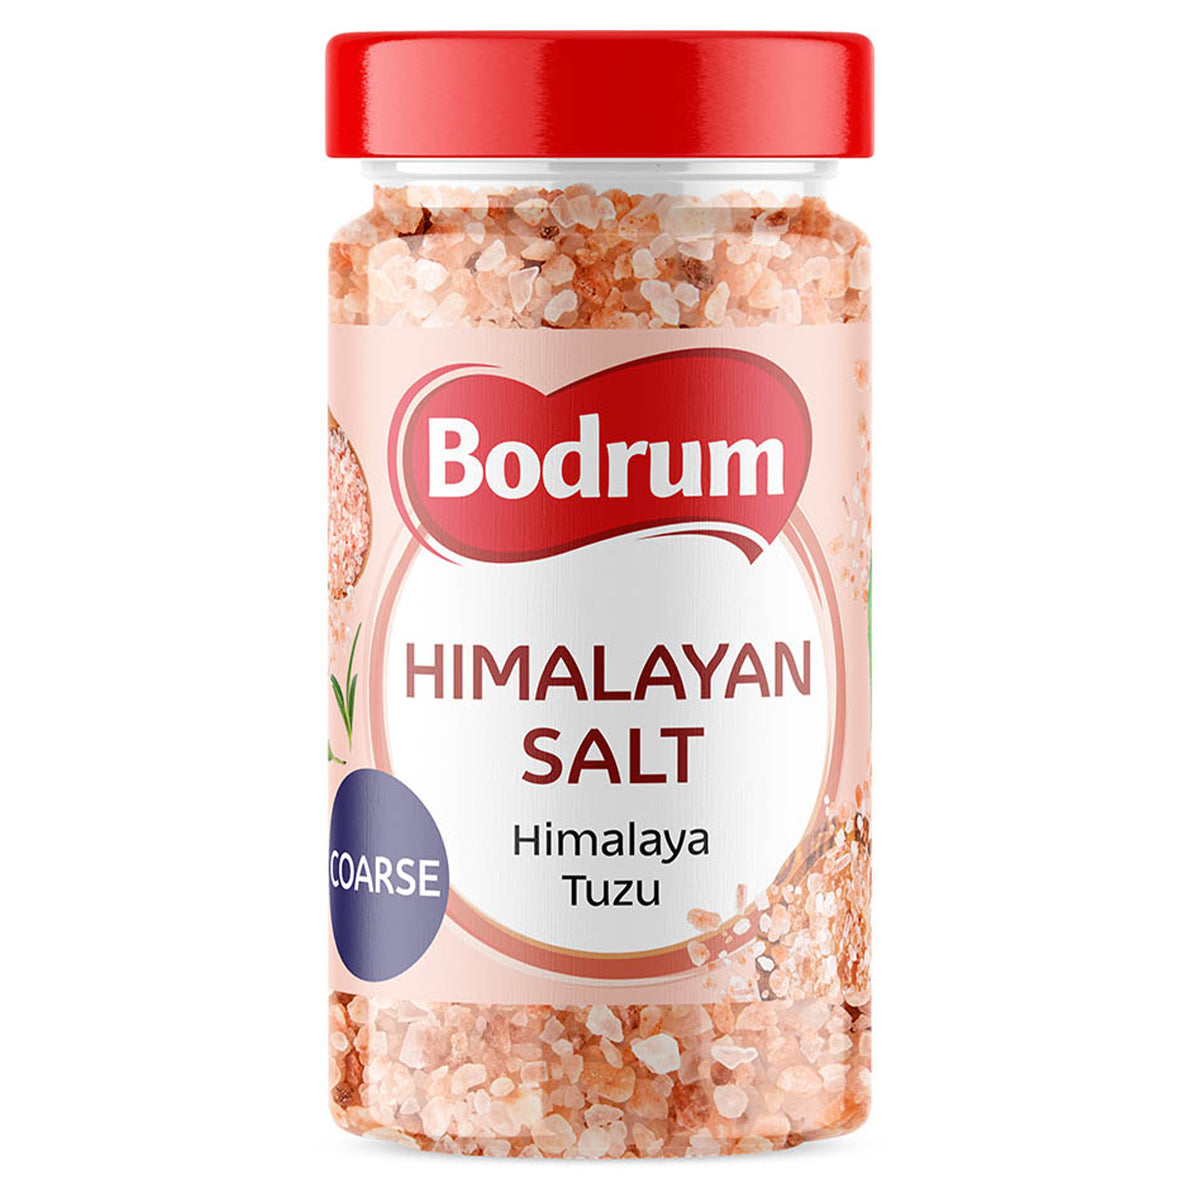 Bodrum - Coarse Himalayan Salt - 450g - Continental Food Store